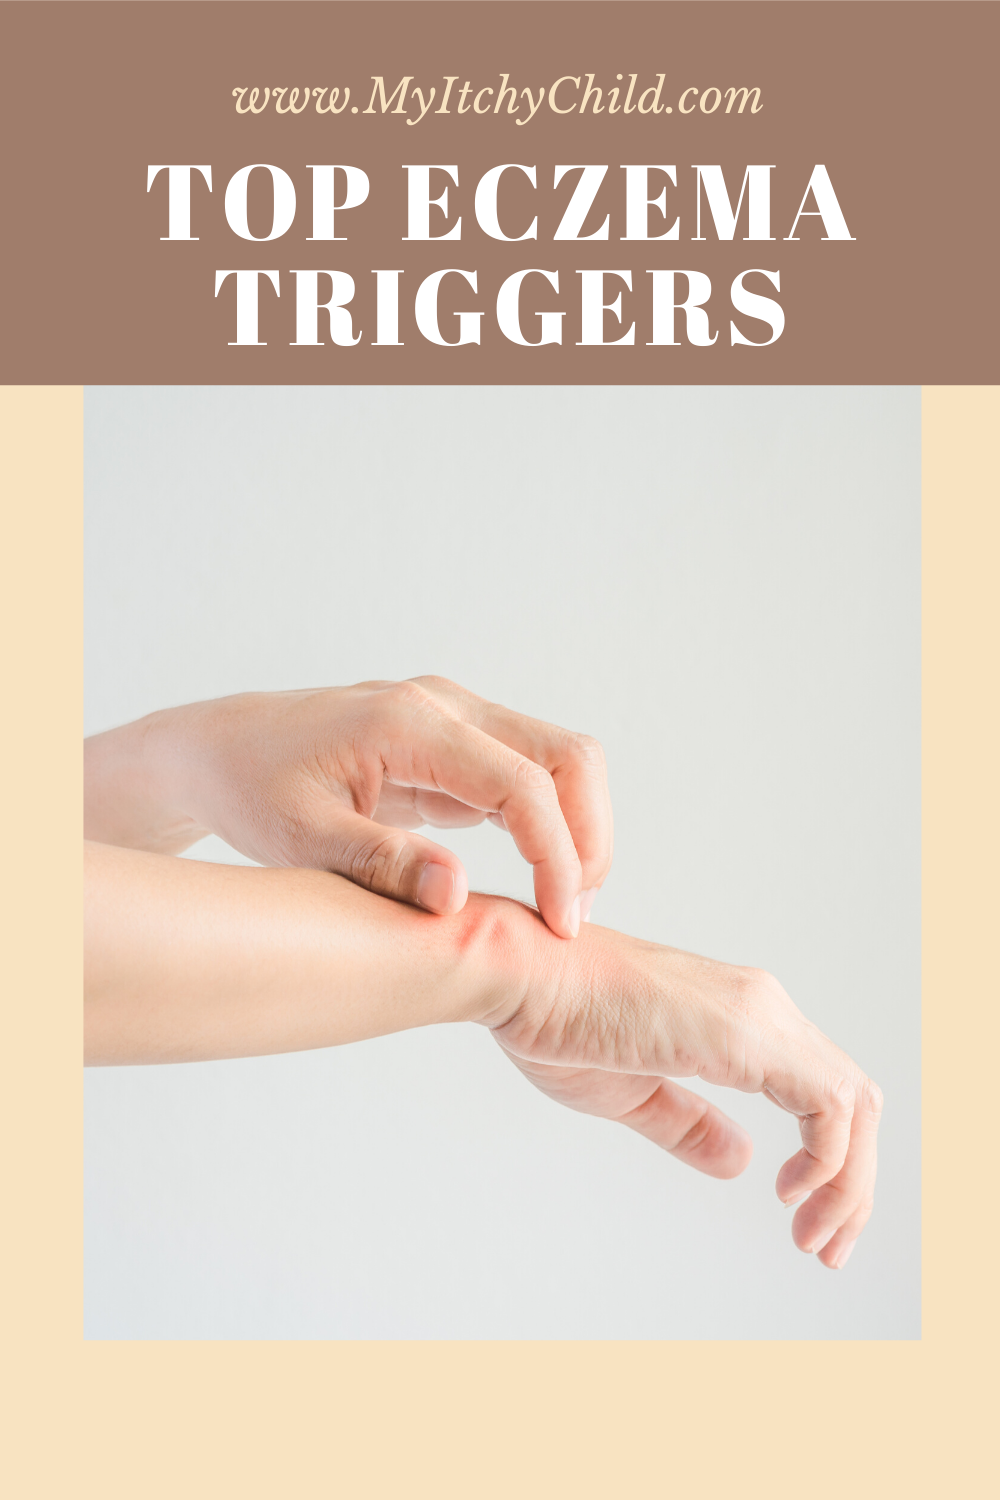 Top Eczema Triggers in 2020